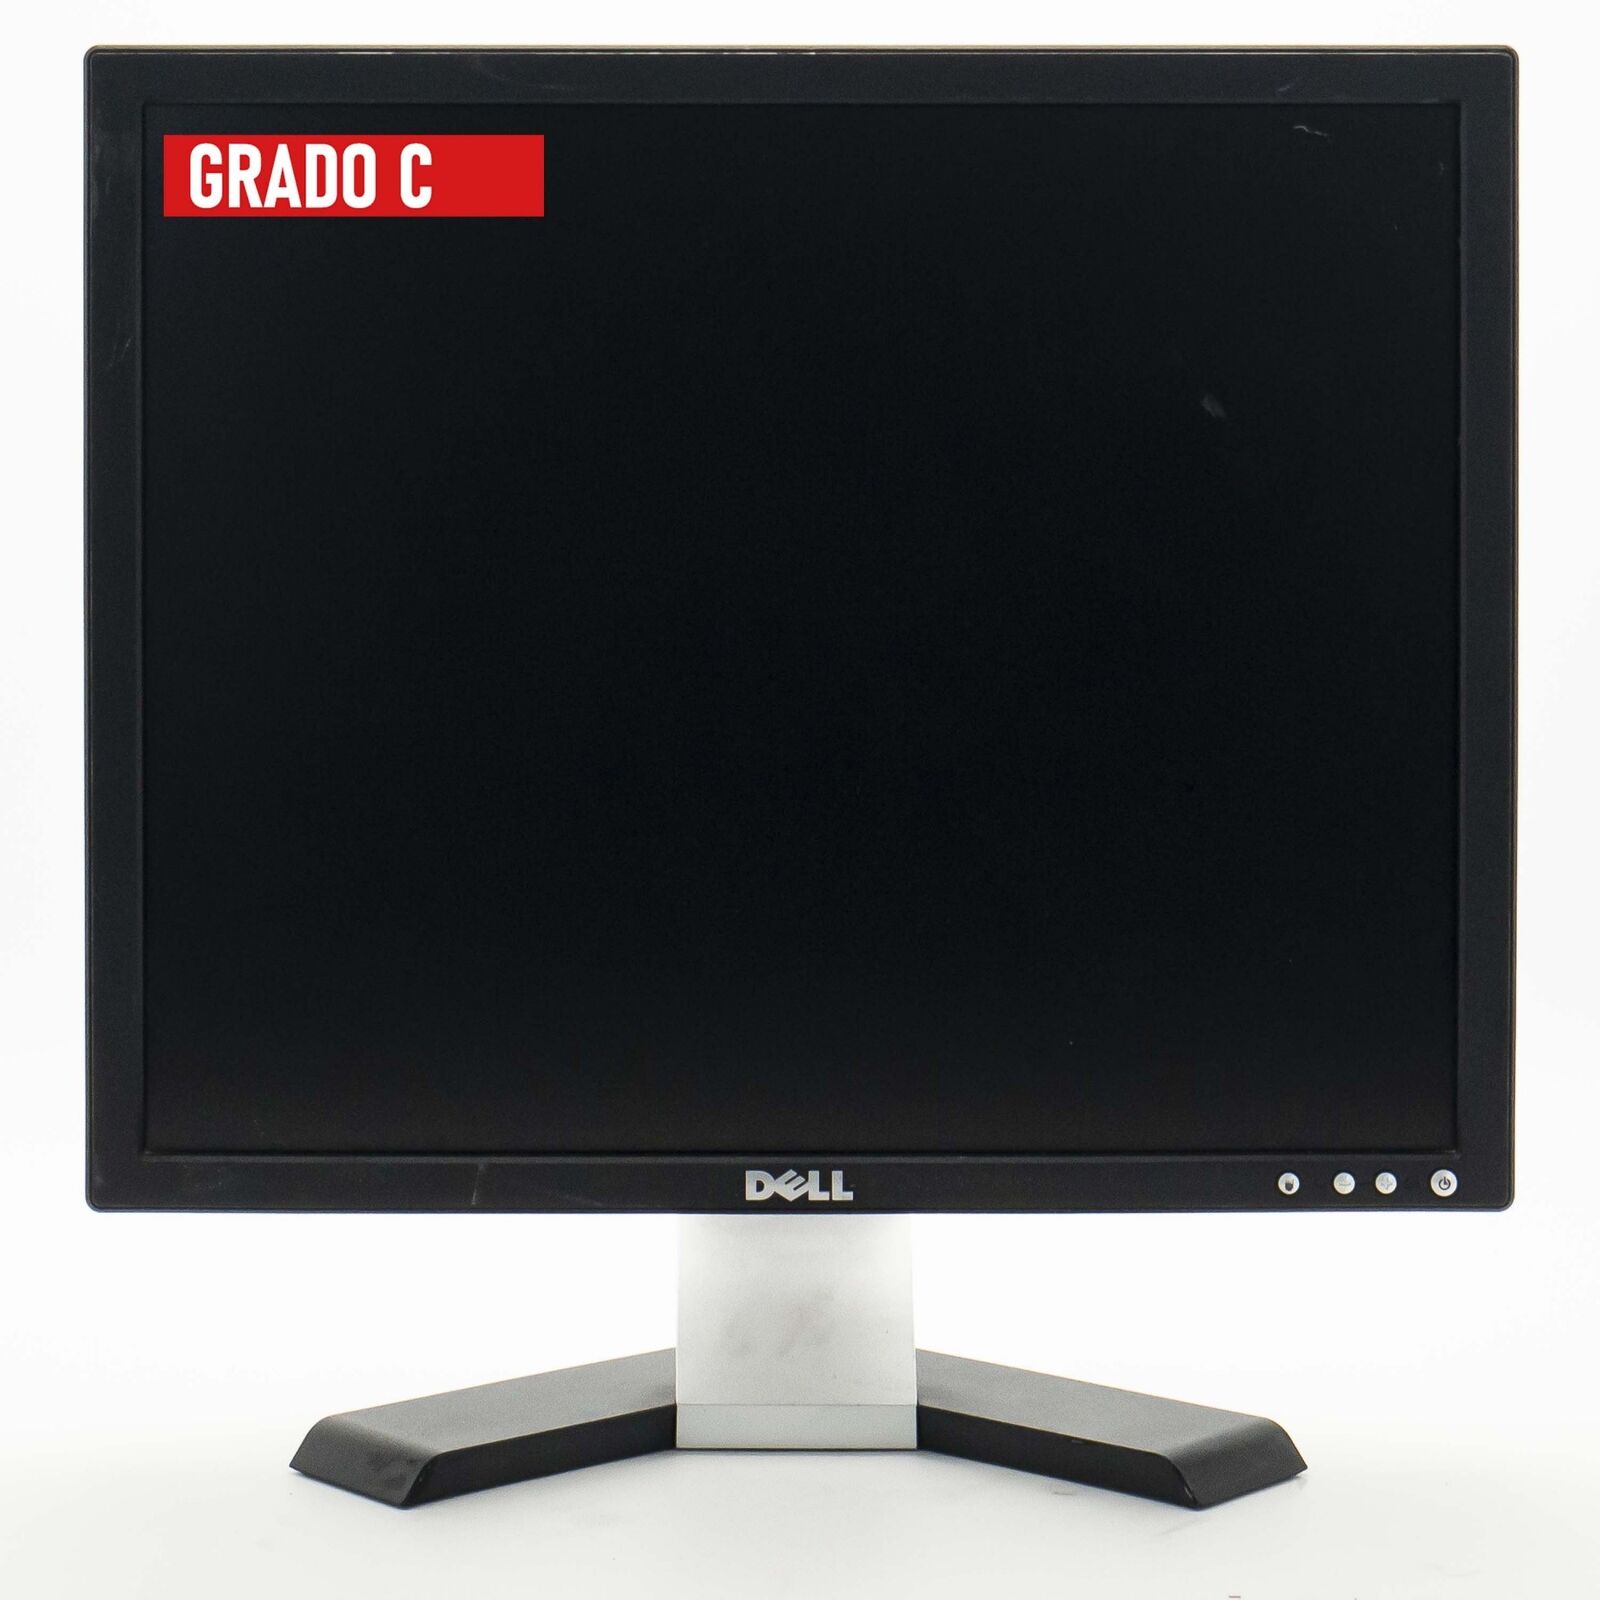 Dell E198FPf 19” 4:3 5:4 Screen Monitor LCD Display Panel DVR PC Computer